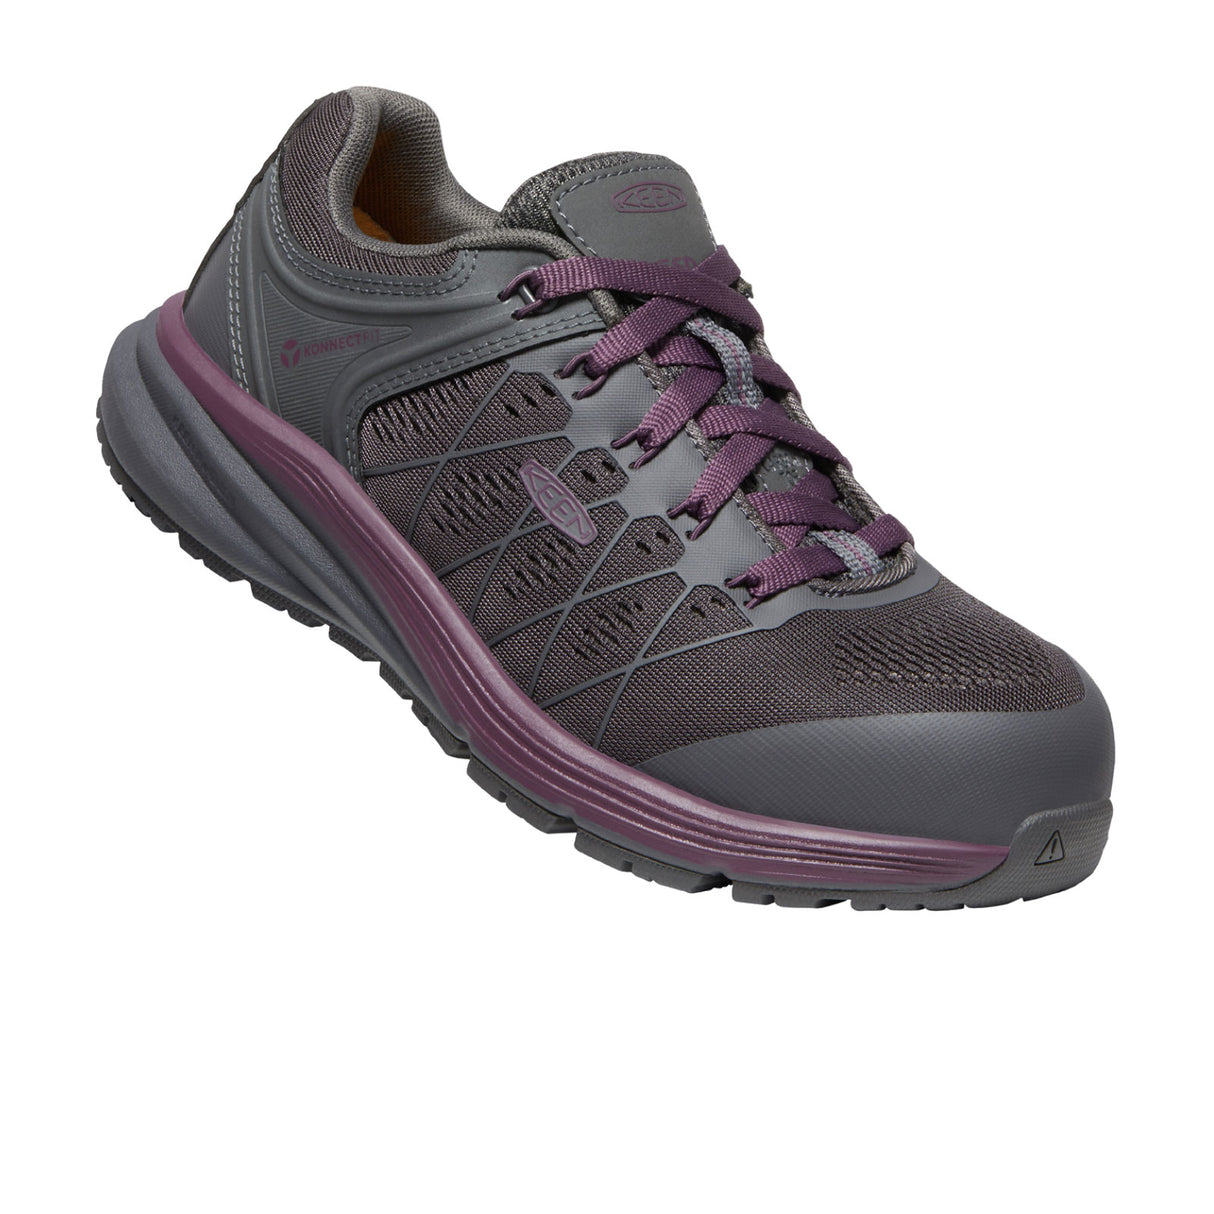 Keen Utility Vista Energy ESD Carbon Fiber Toe Work Shoe (Women) - Magnet/Prune Purple Boots - Work - Low - The Heel Shoe Fitters